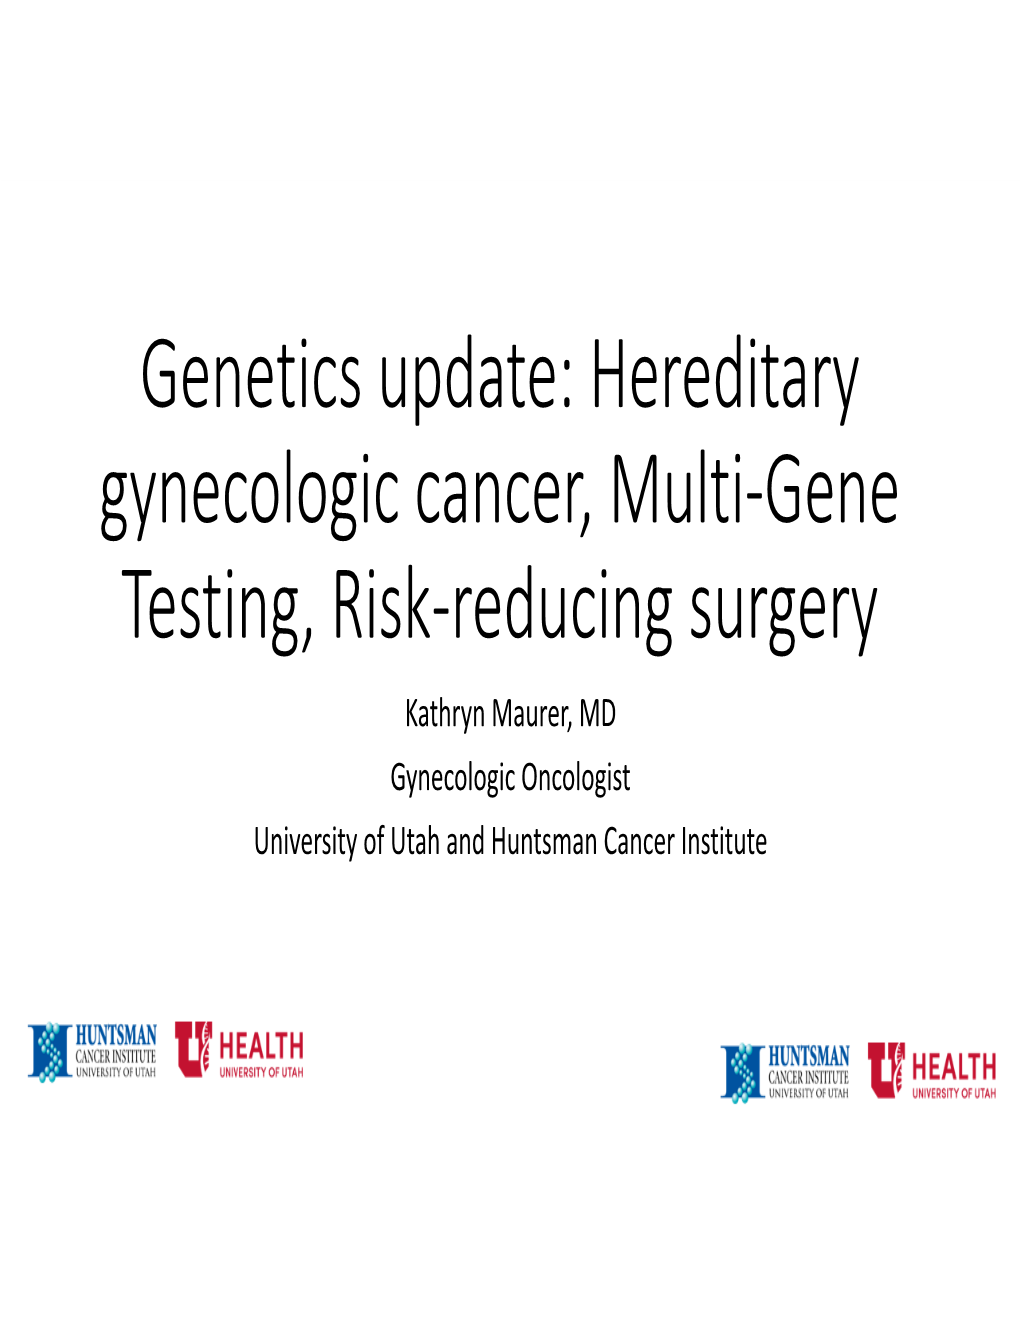 Genetics Update: Hereditary Gynecologic Cancer, Multi‐Gene Testing, Risk‐Reducing Surgery